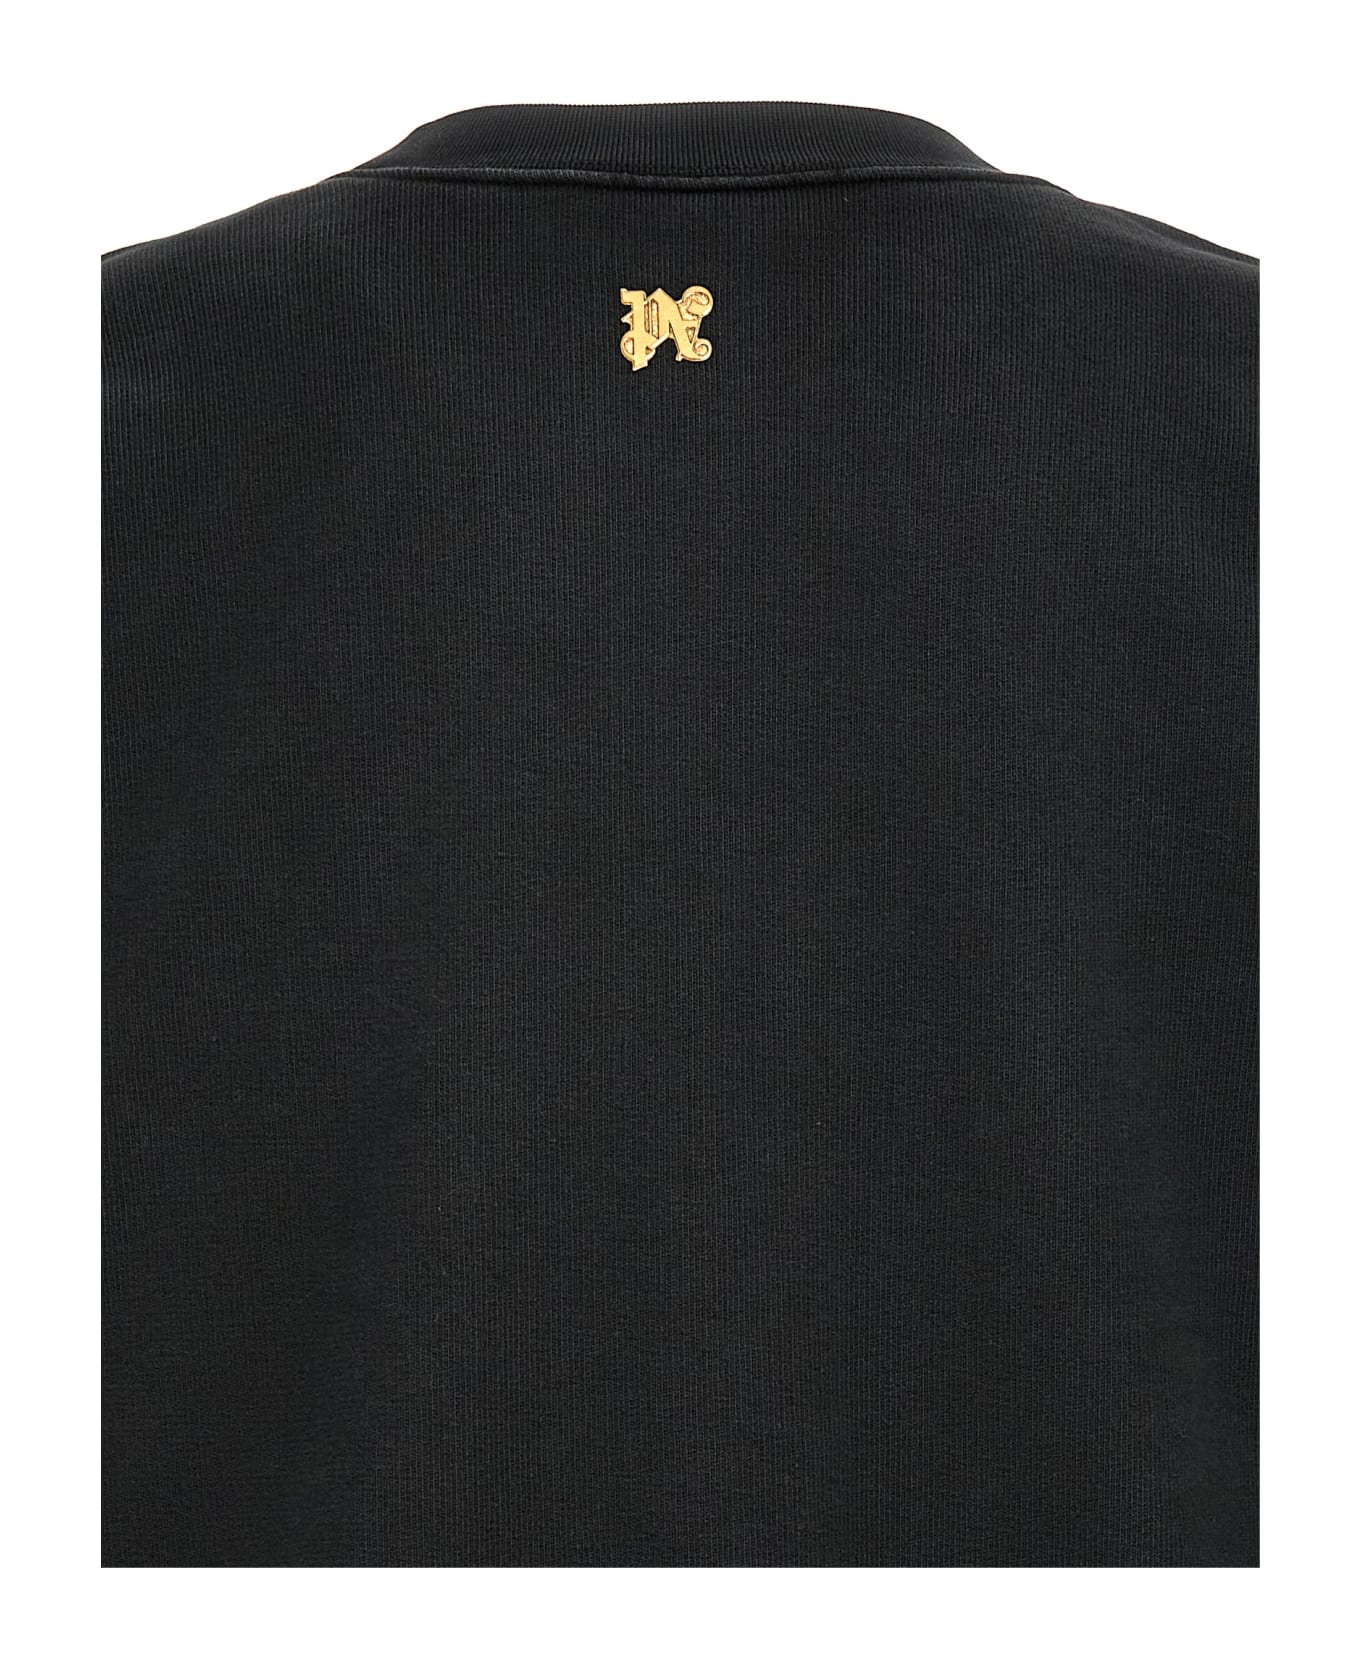 Palm Angels 'burning Monogram' Sweatshirt - Black   フリース